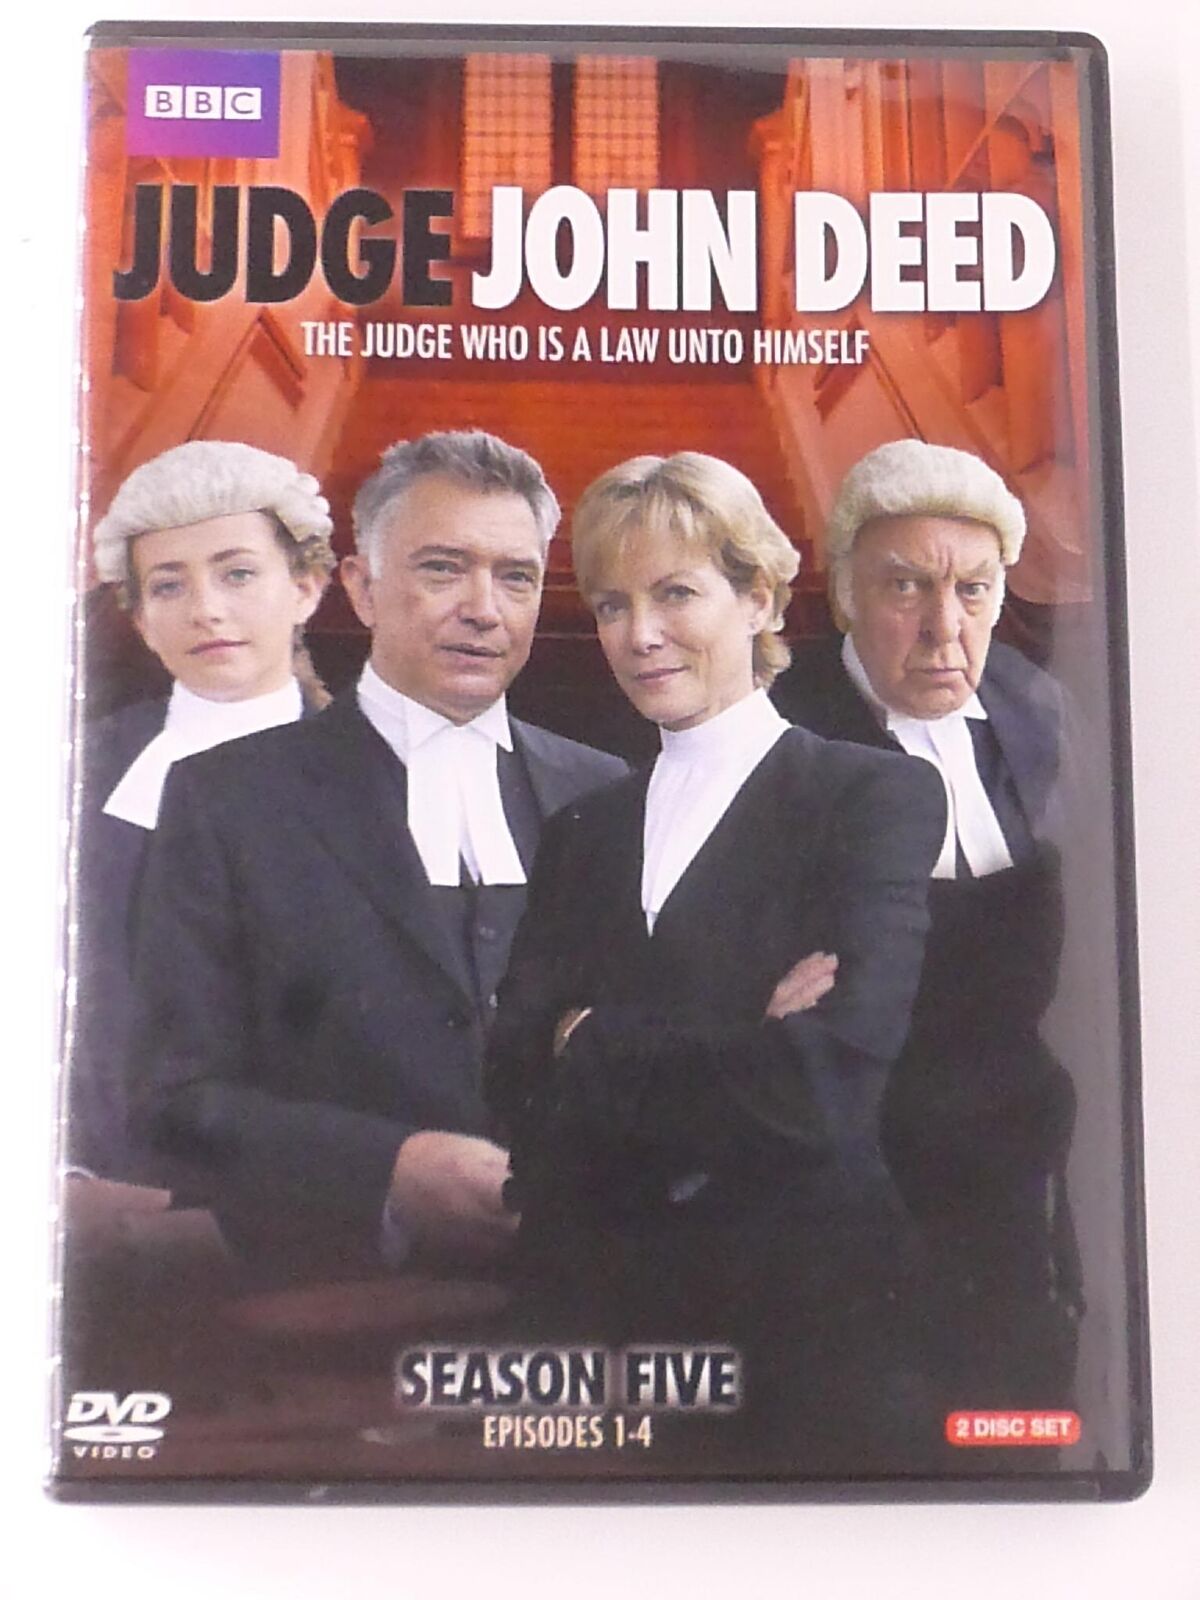 Judge John Deed - Season Five Episodes 1-4 (DVD, BBC) - I1225